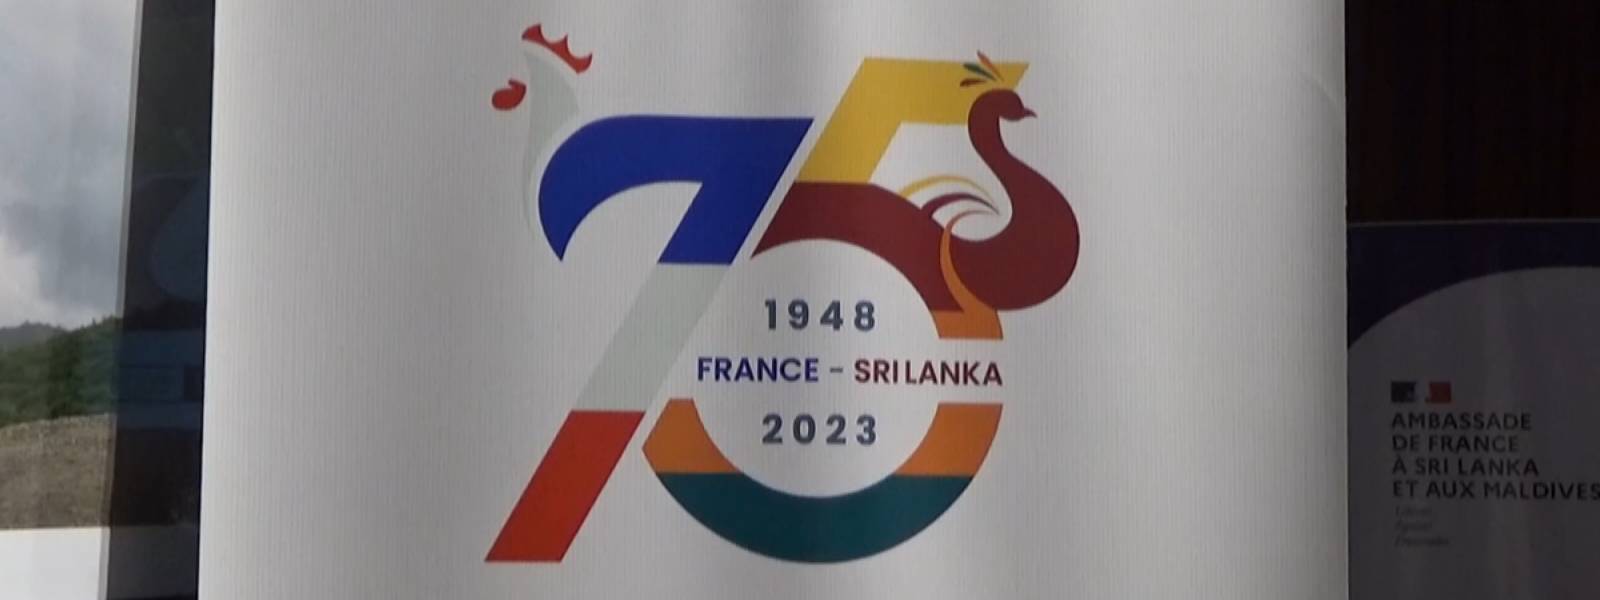 Sri Lanka and France celebrate 75 years of friendship